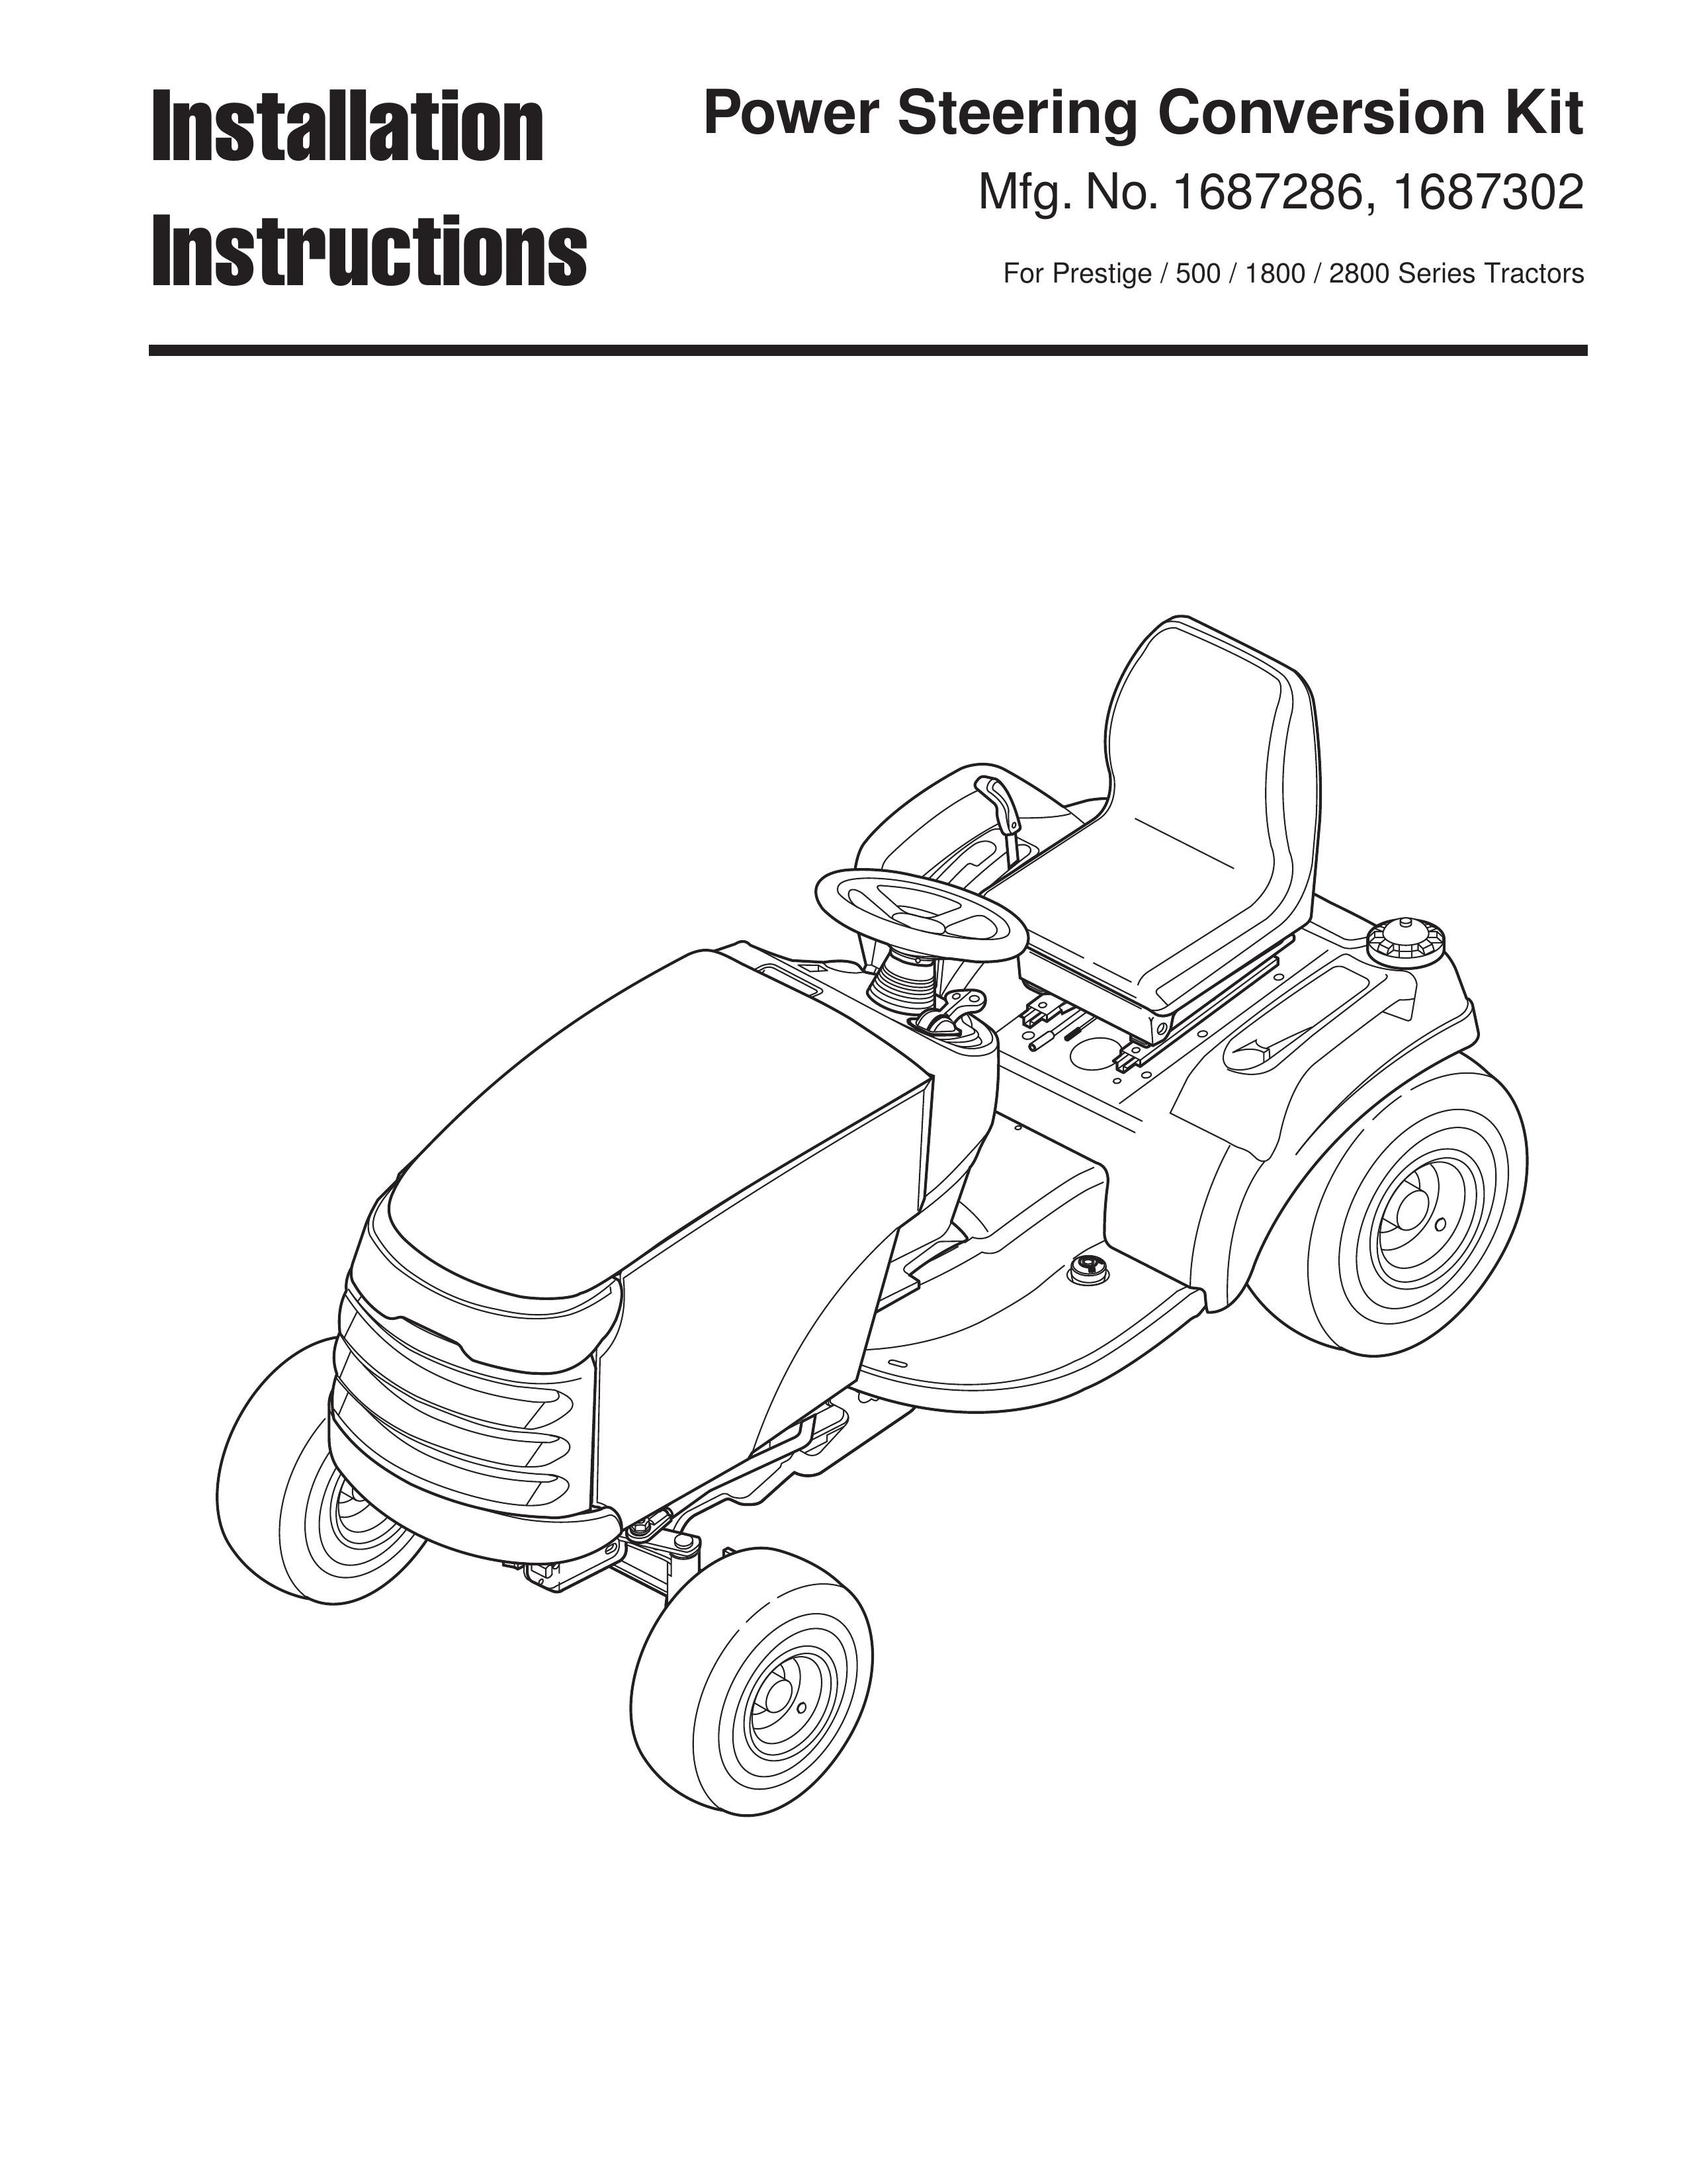 Briggs & Stratton 1687302 Lawn Mower User Manual